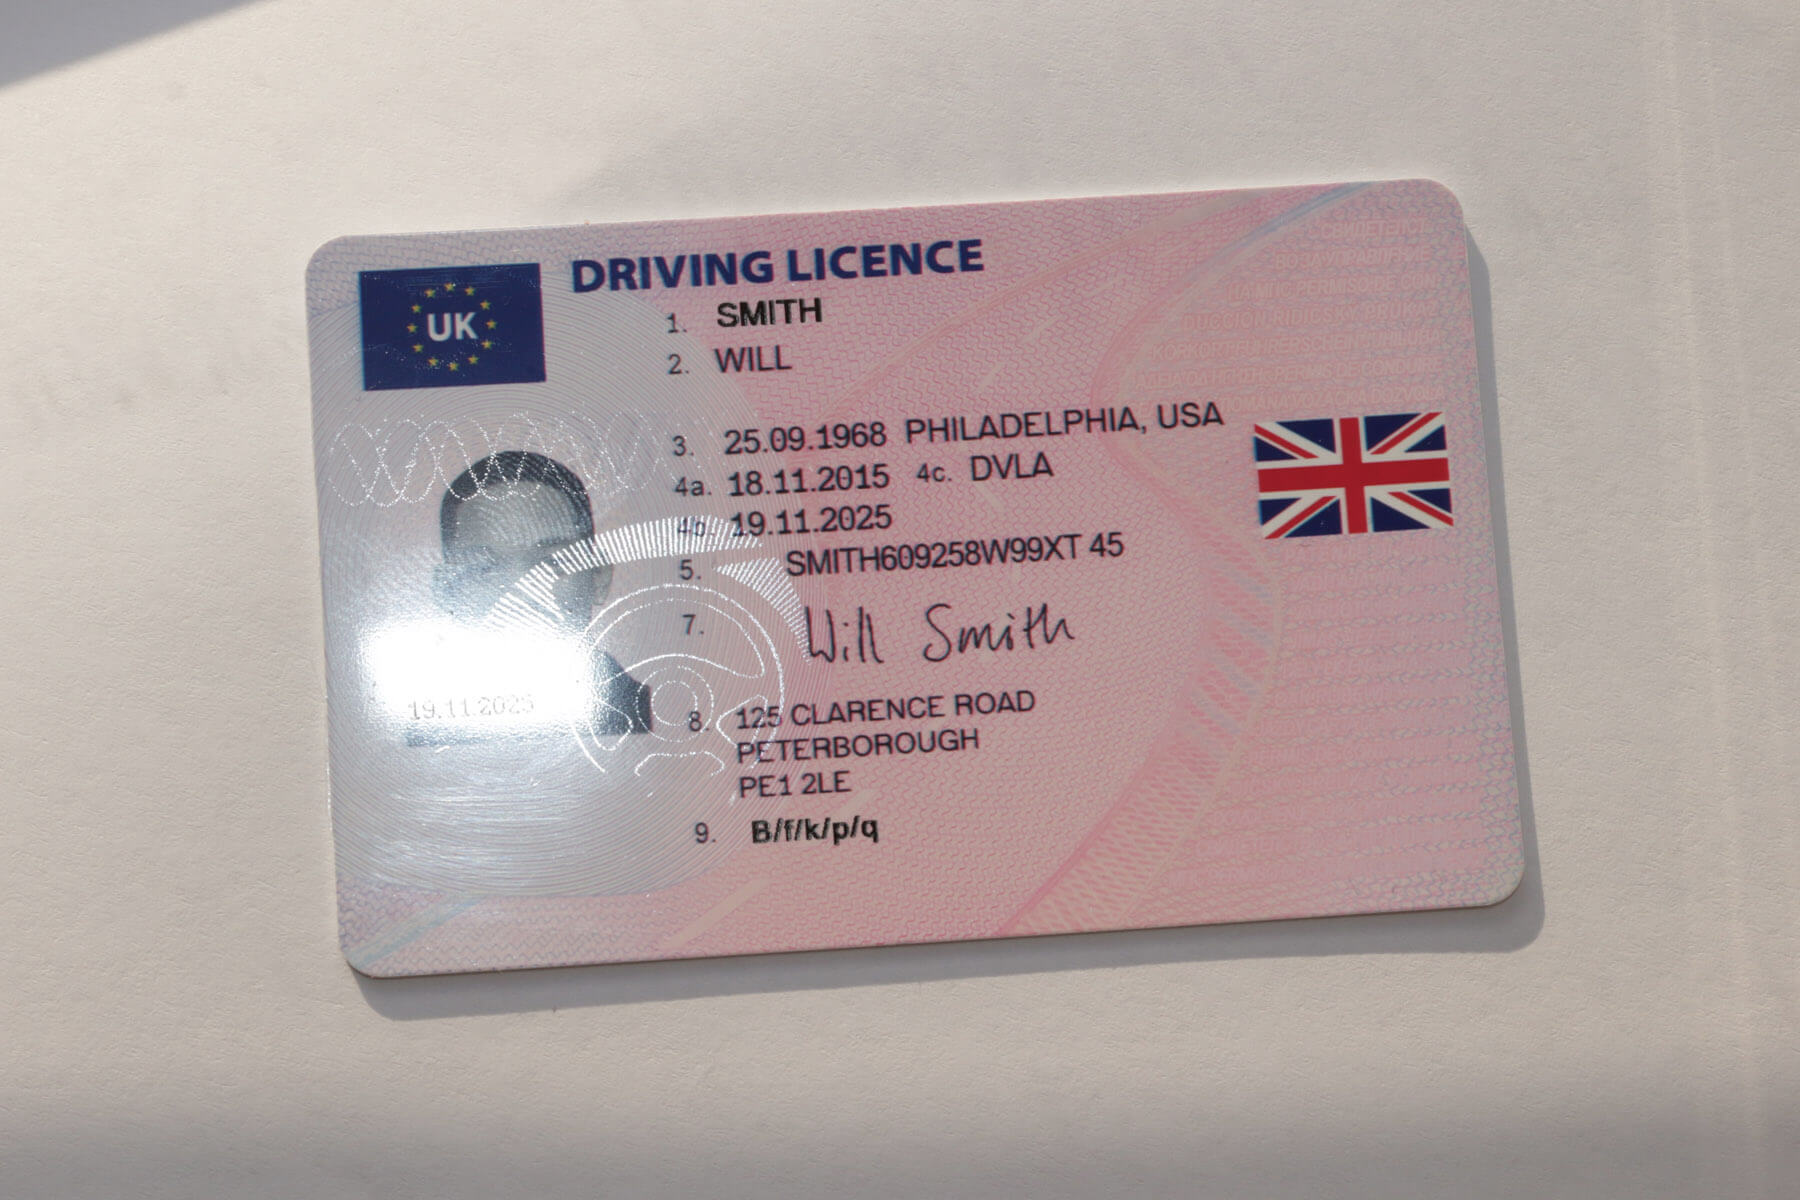 Irish driving licence templates